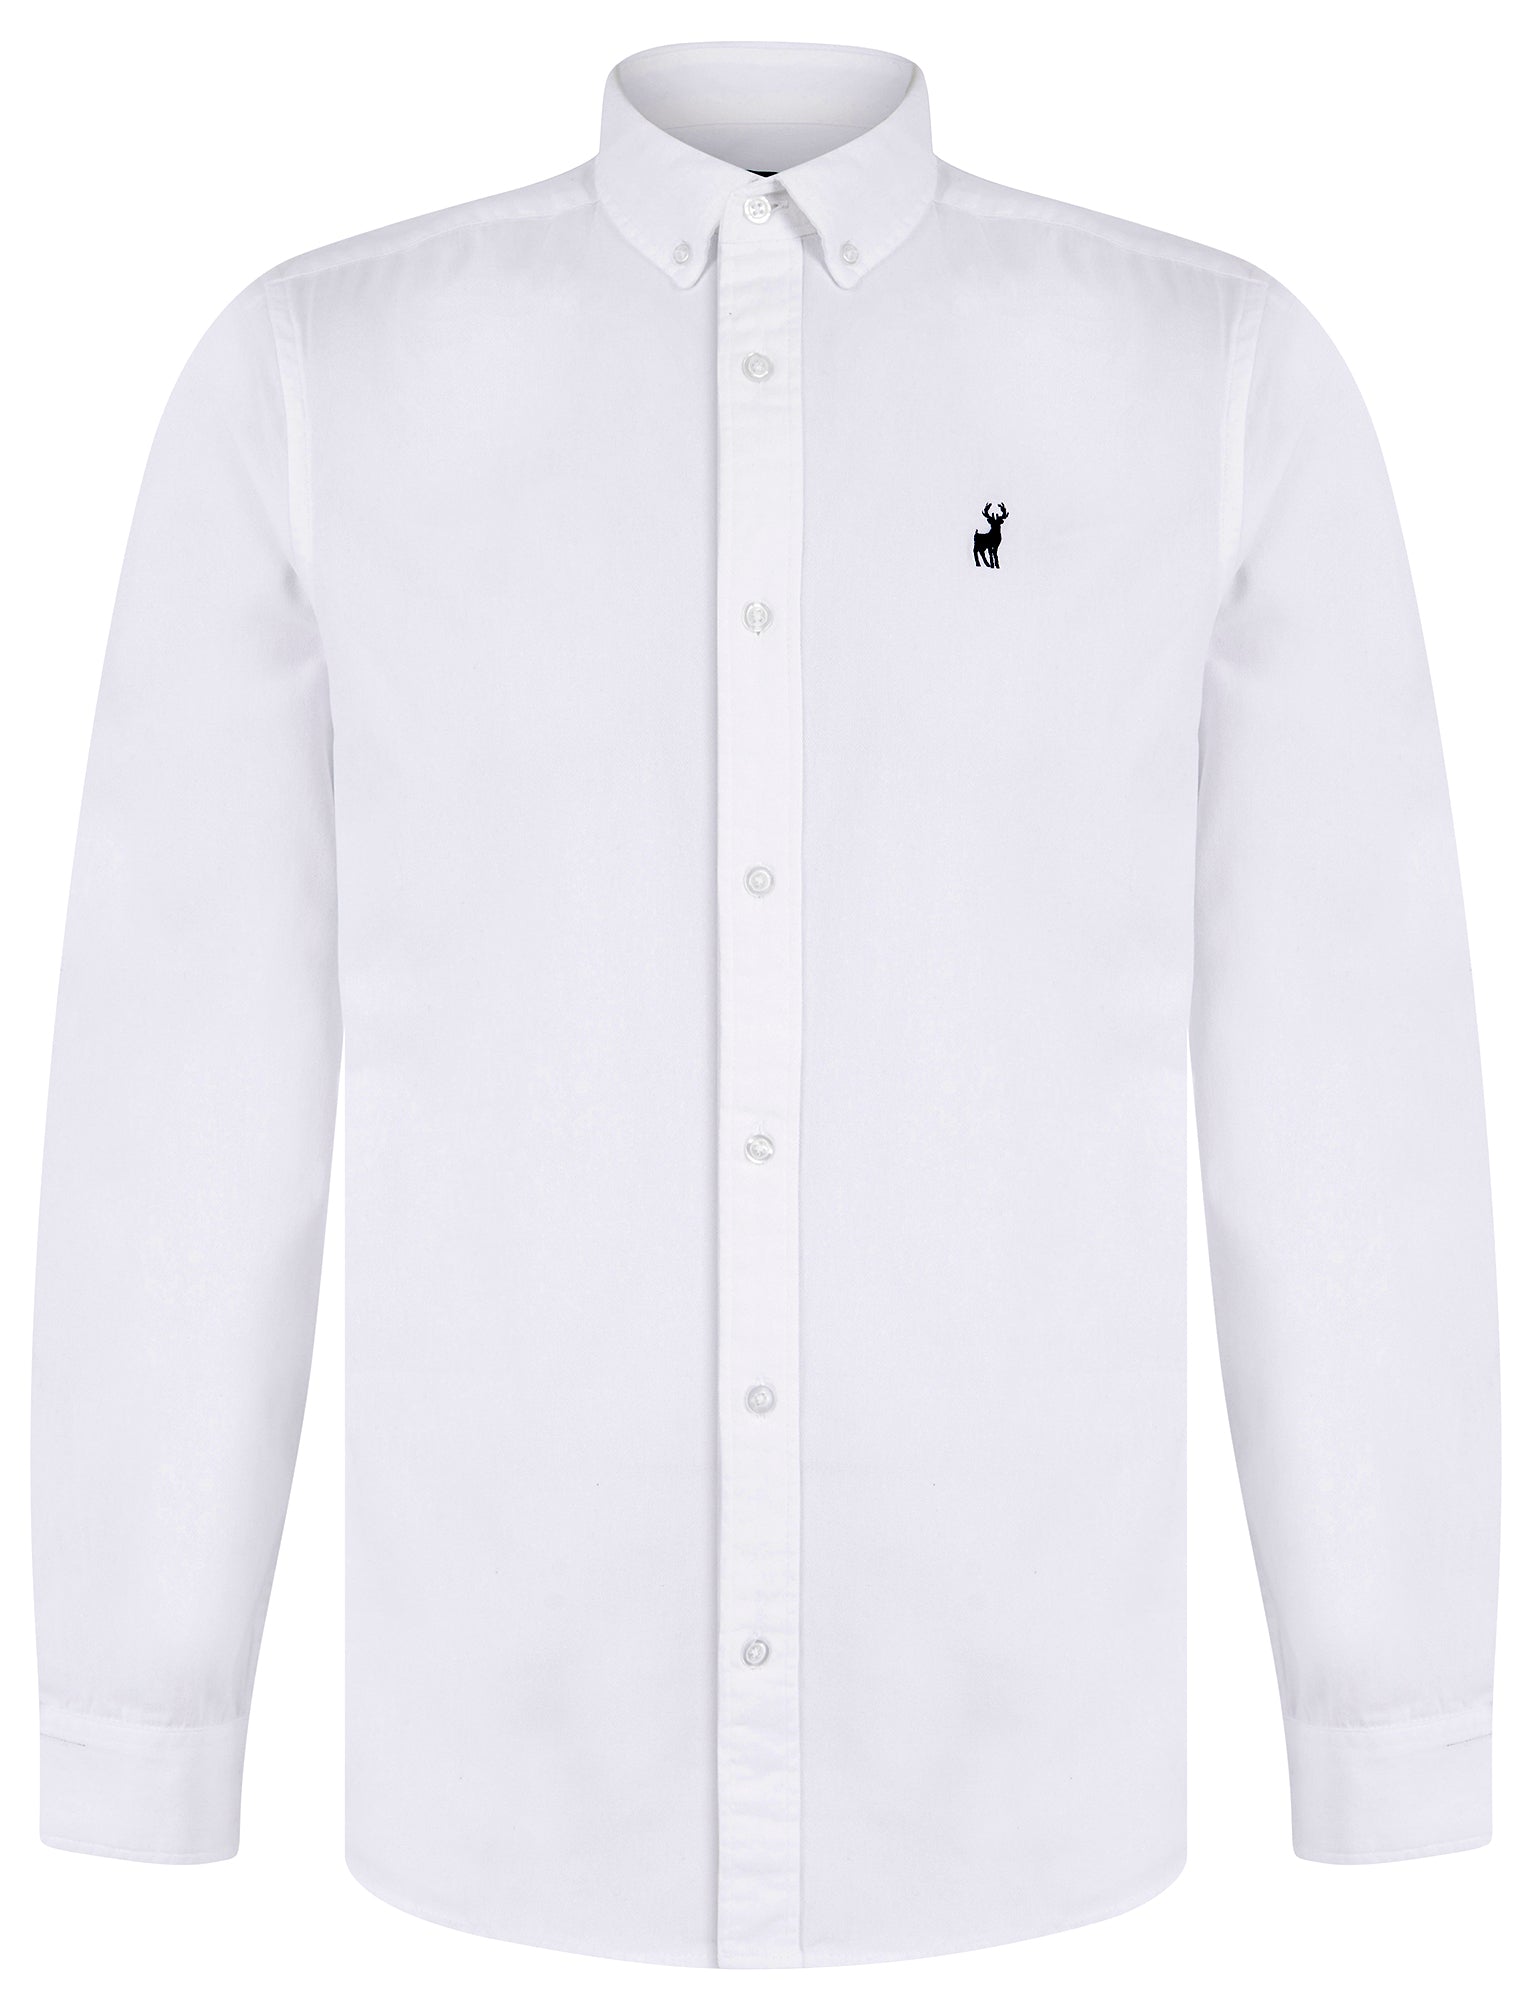 Leyburn Cotton Twill Long Sleeve Shirt in Bright White